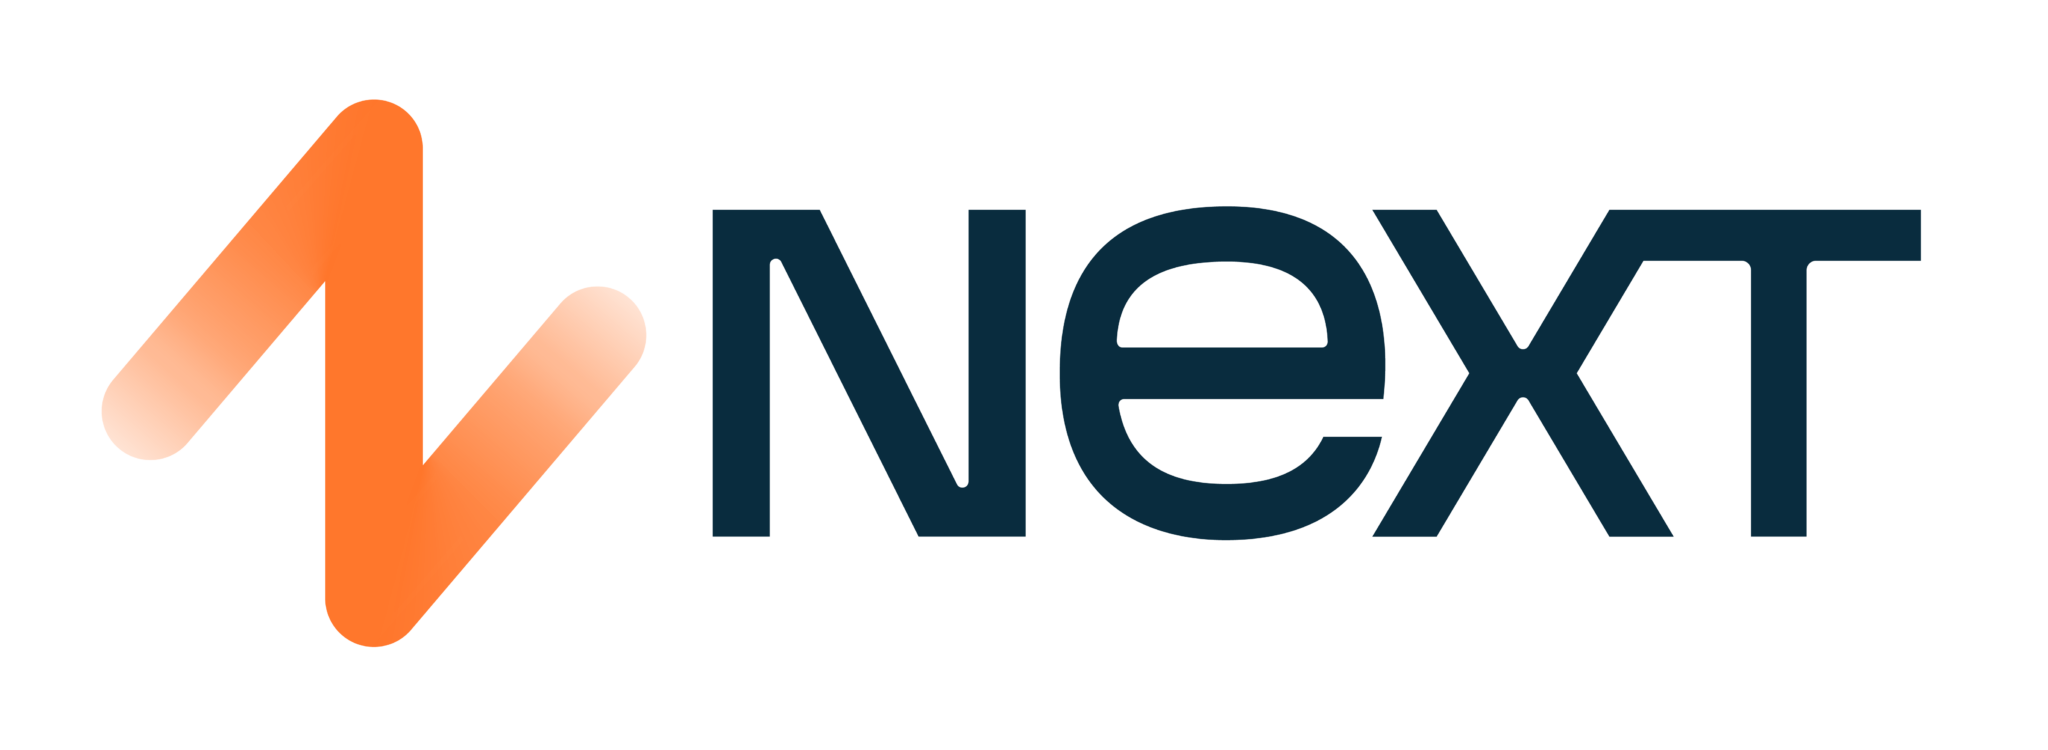 Next One Technology logo